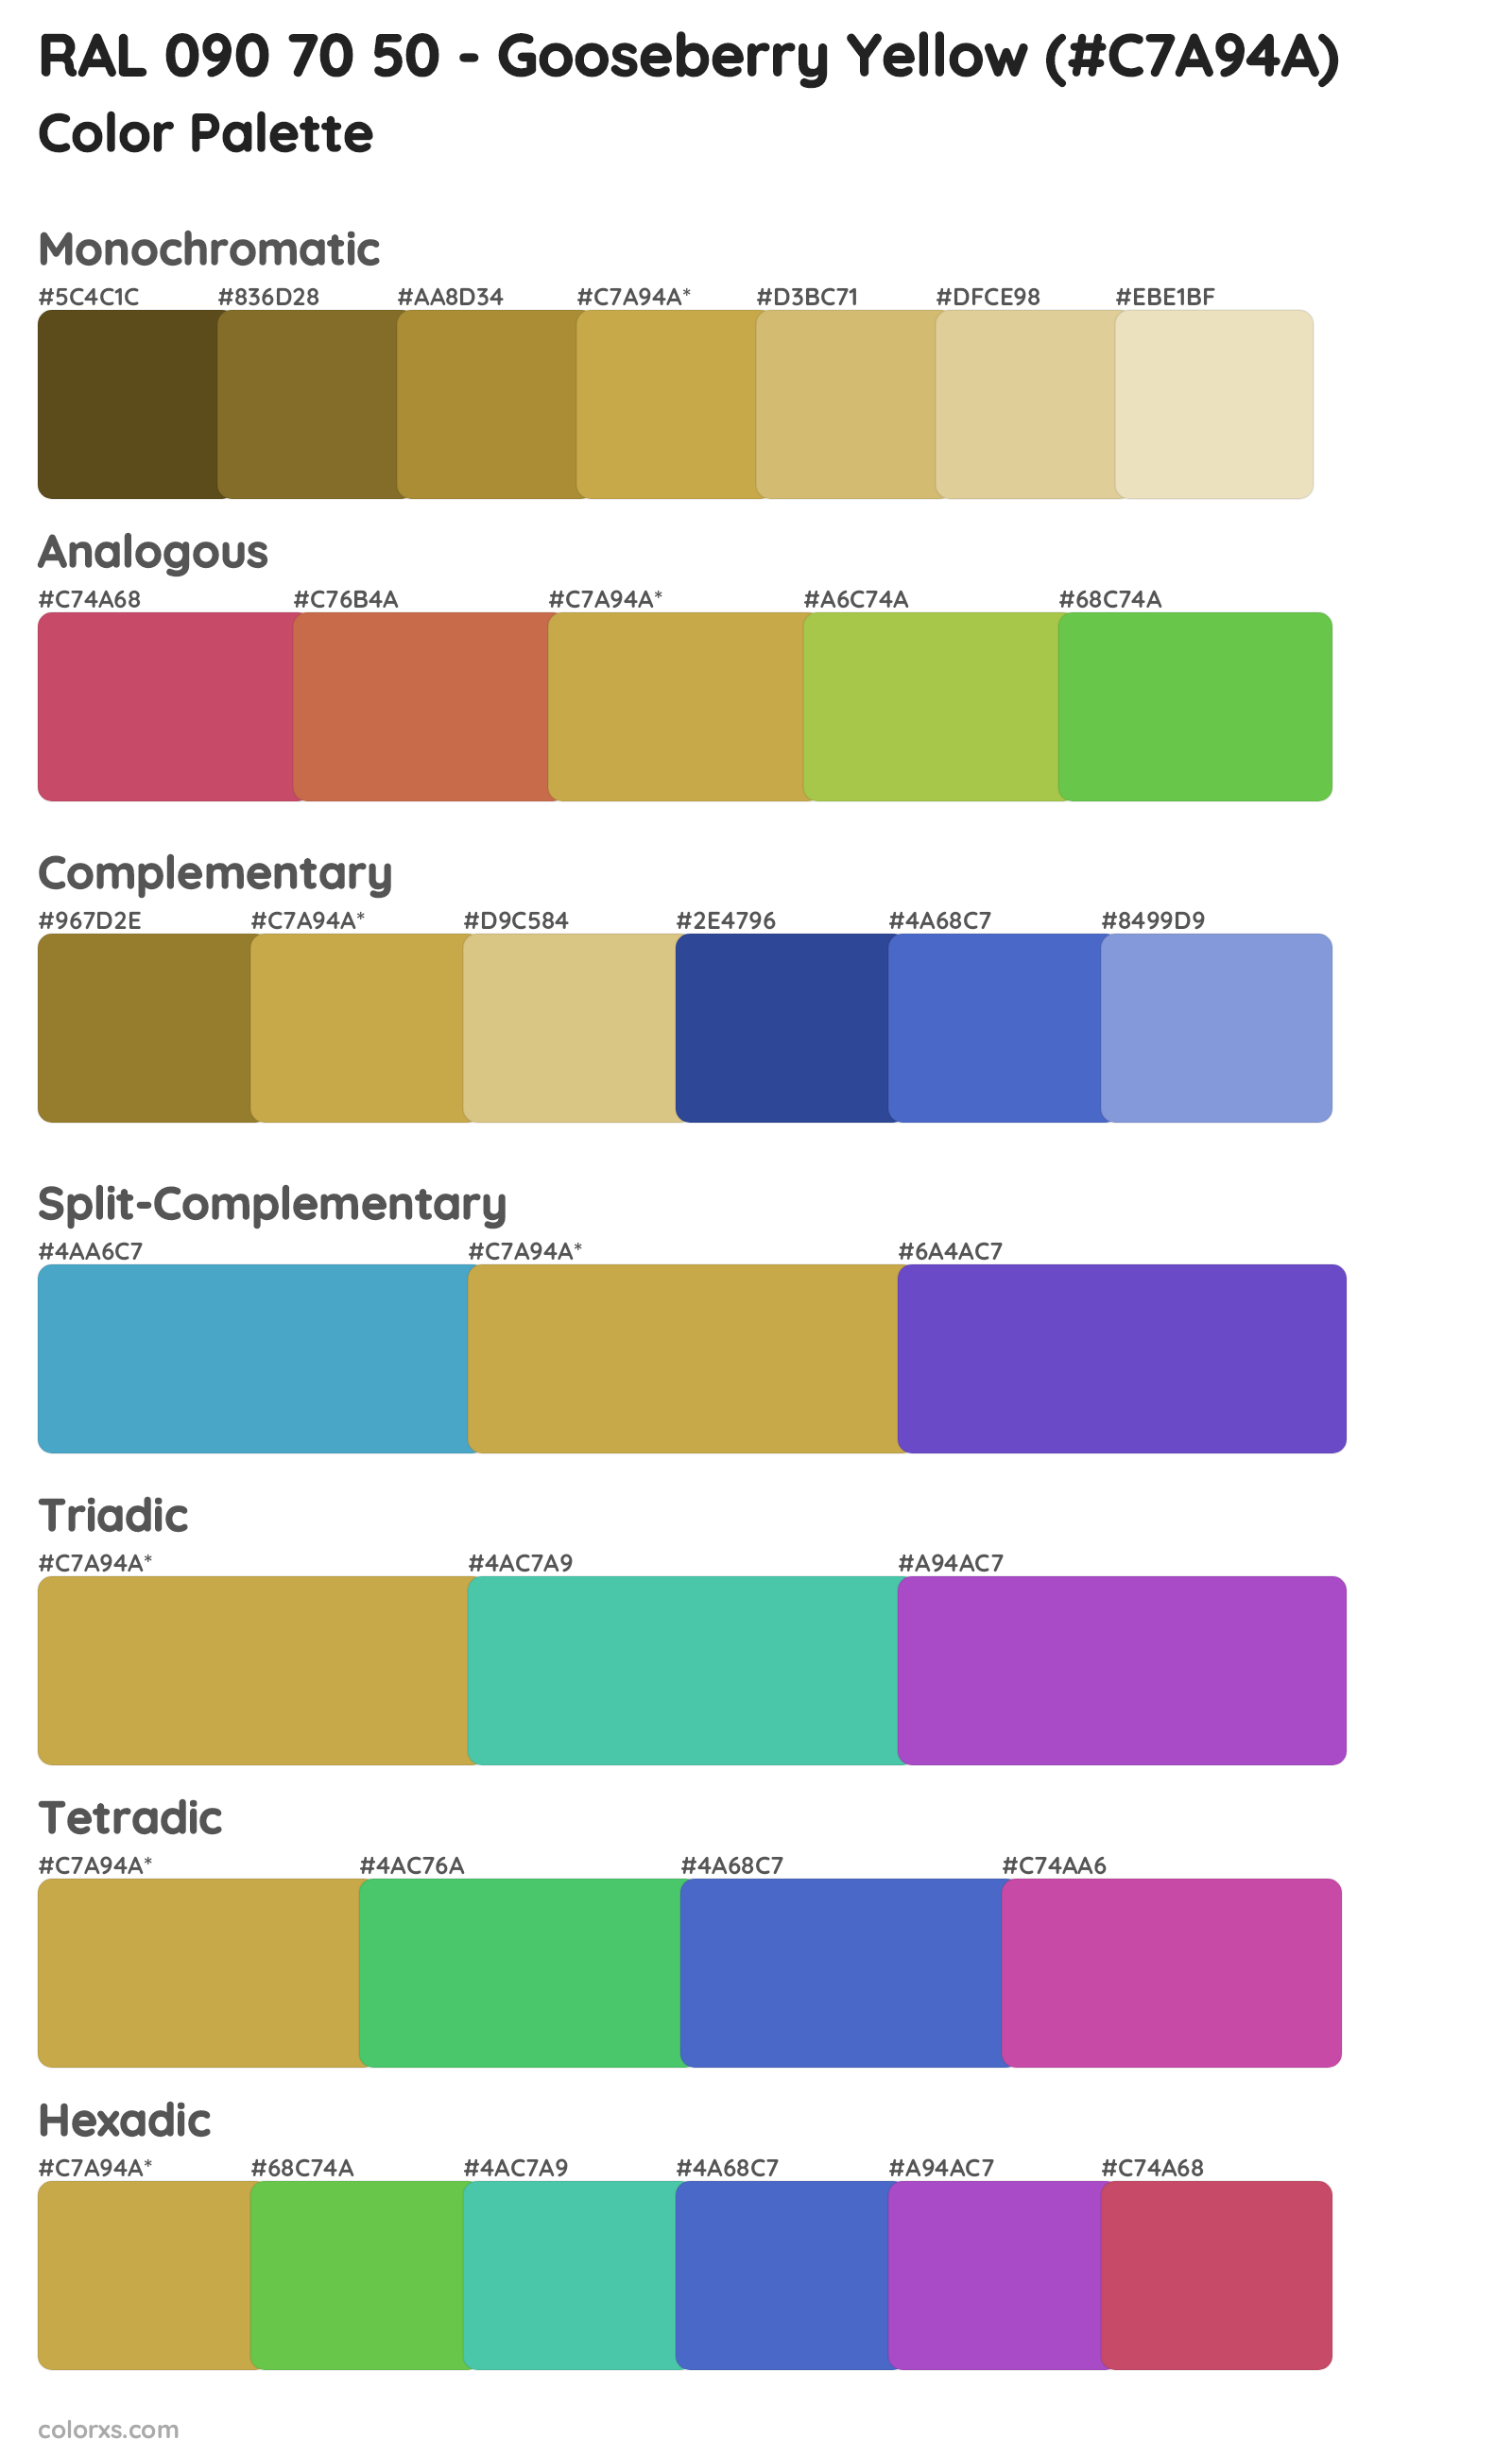 RAL 090 70 50 - Gooseberry Yellow Color Scheme Palettes